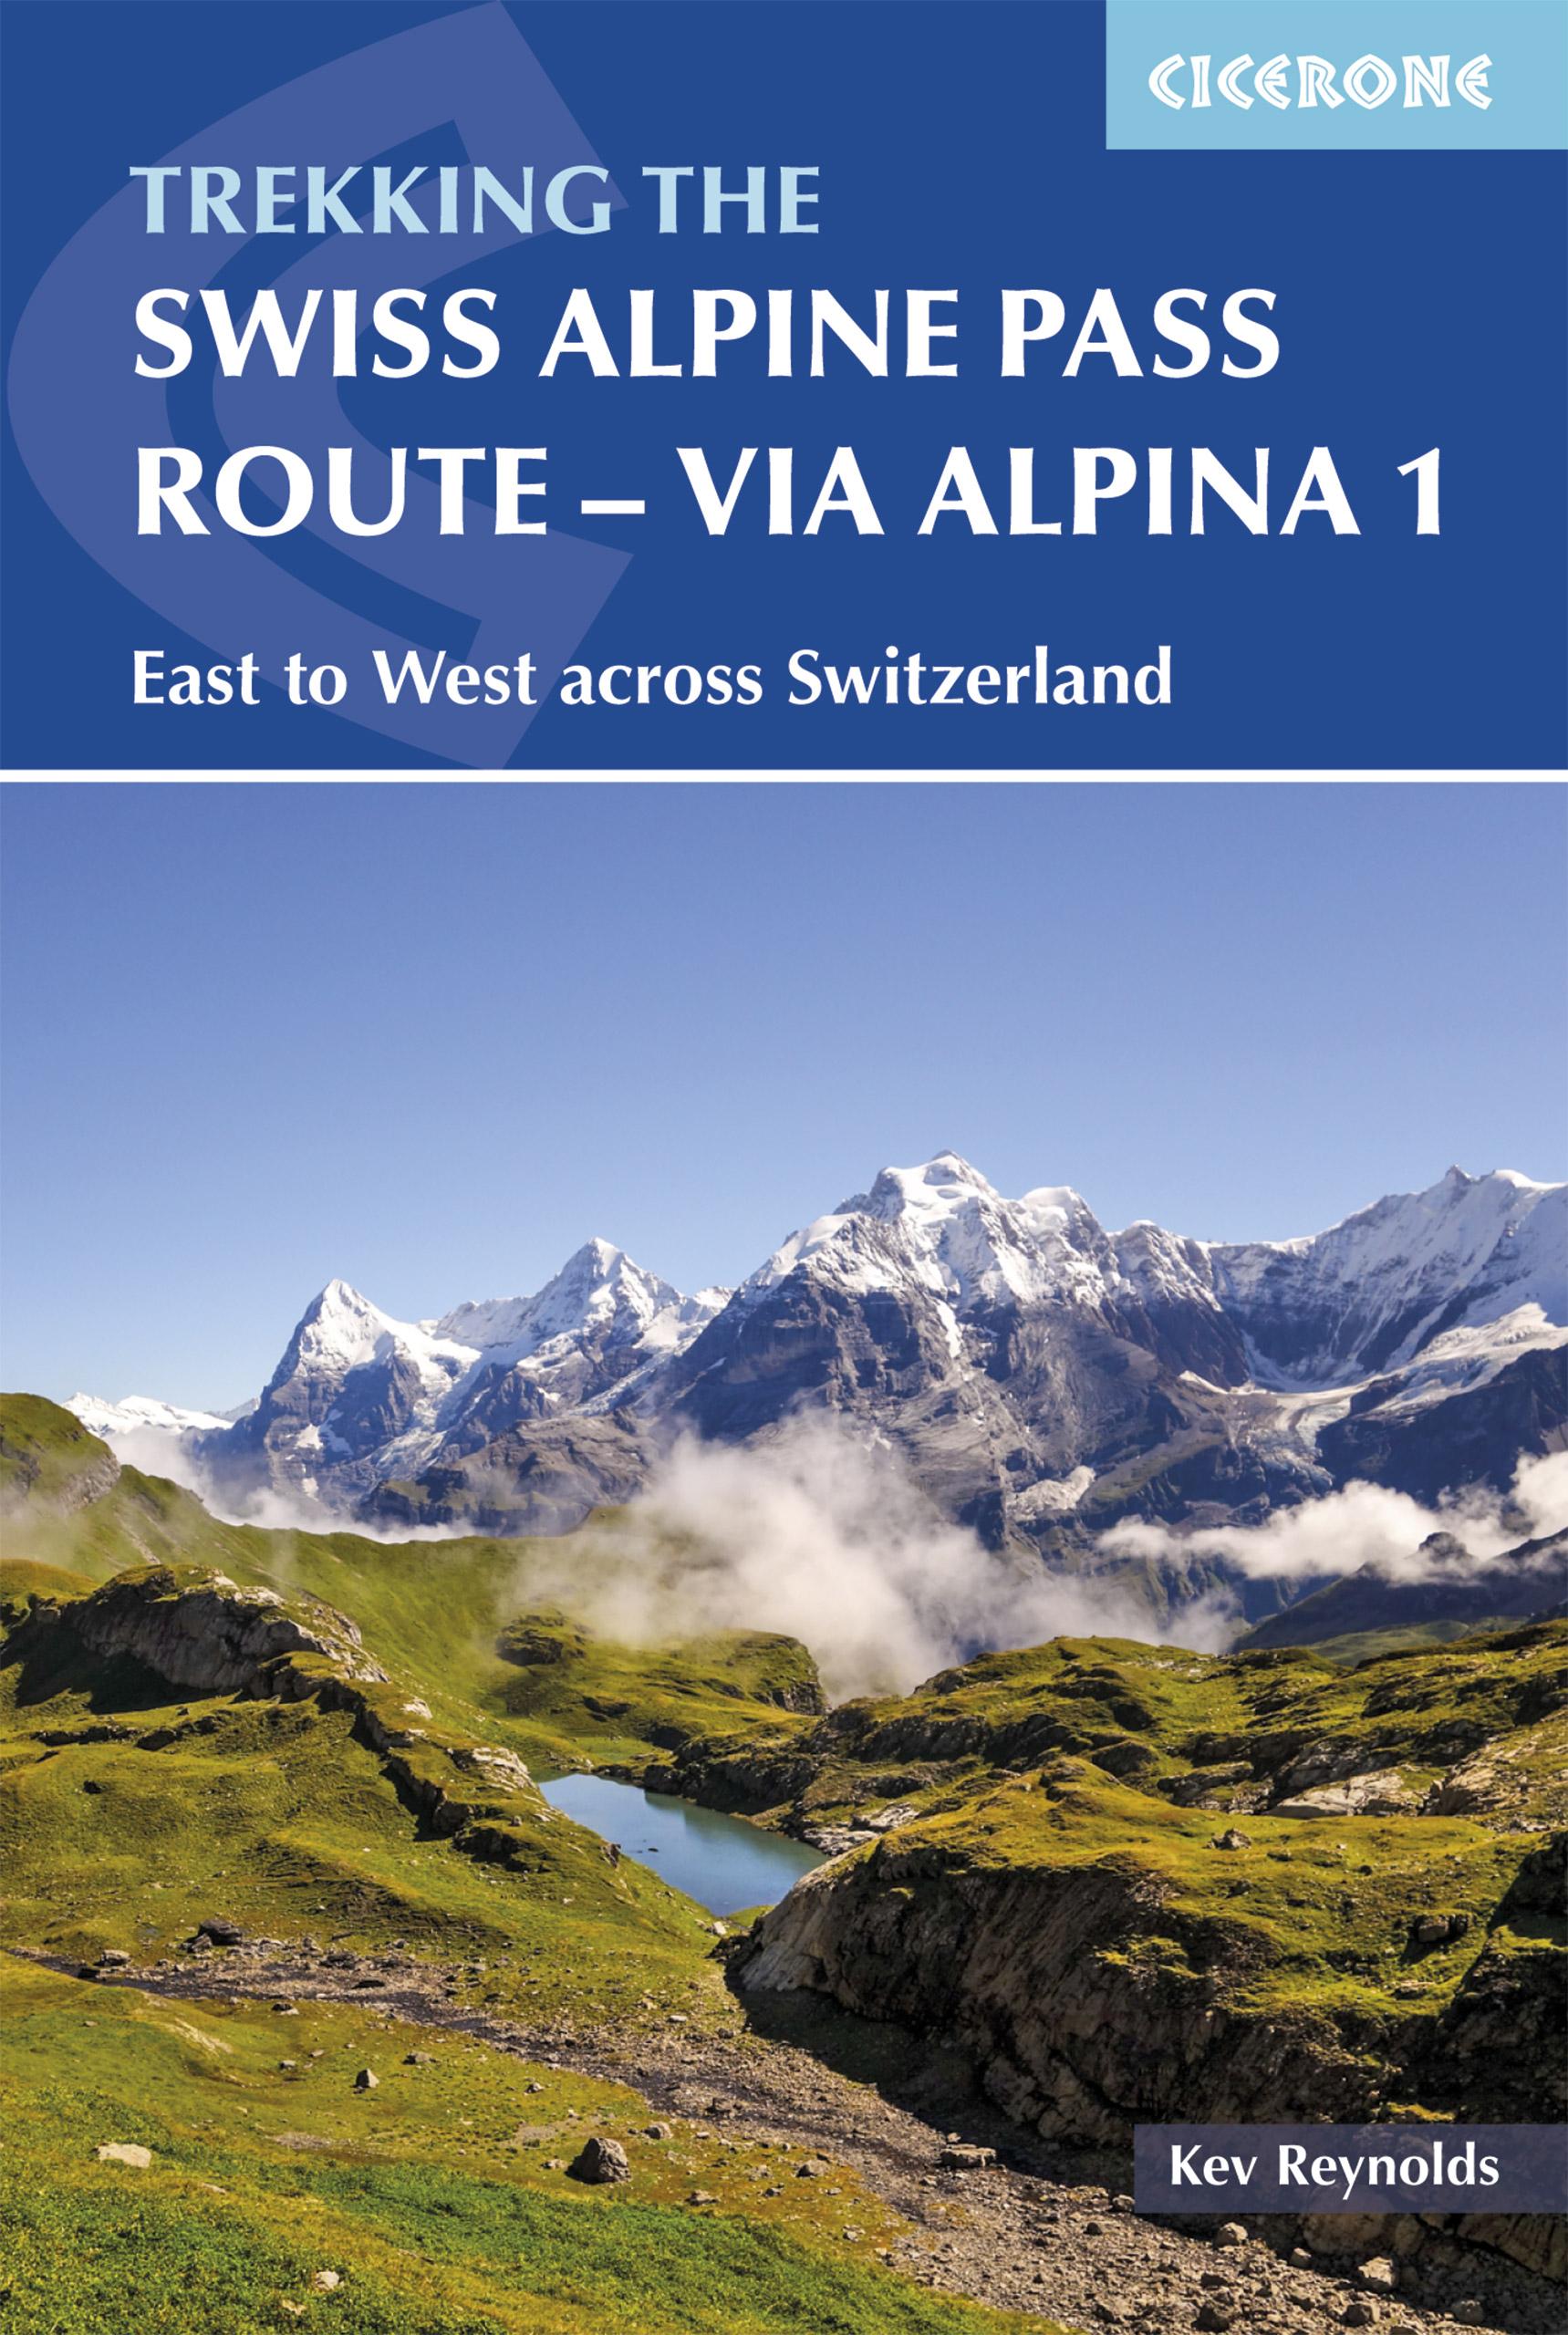 Swiss Alpine Pass Route - via Alpina Route 1